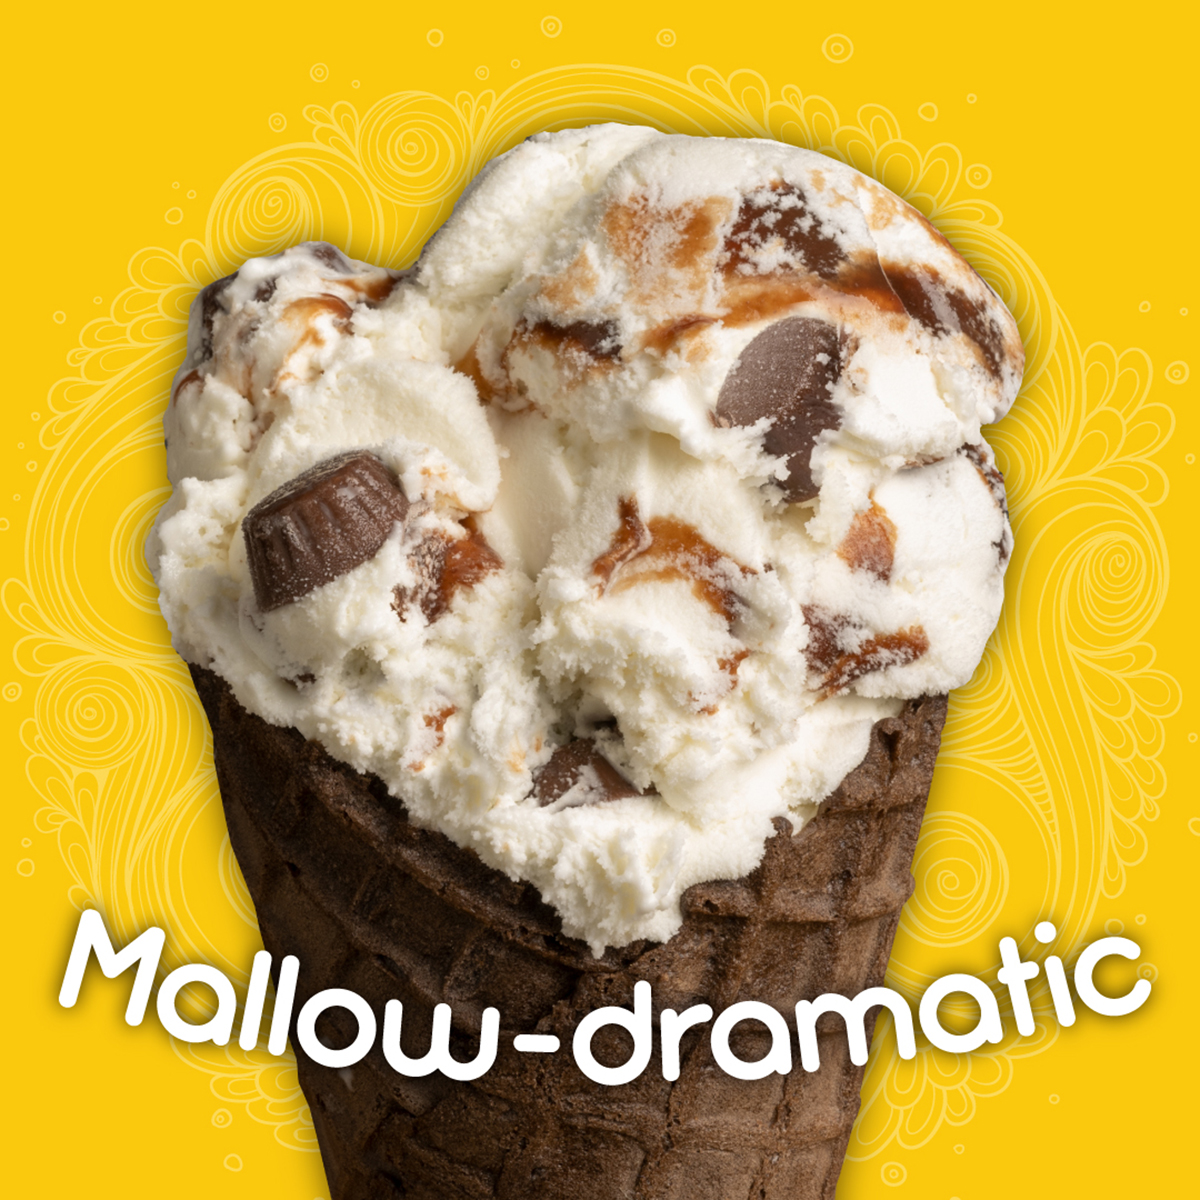 Mallow-dramatic ice cream